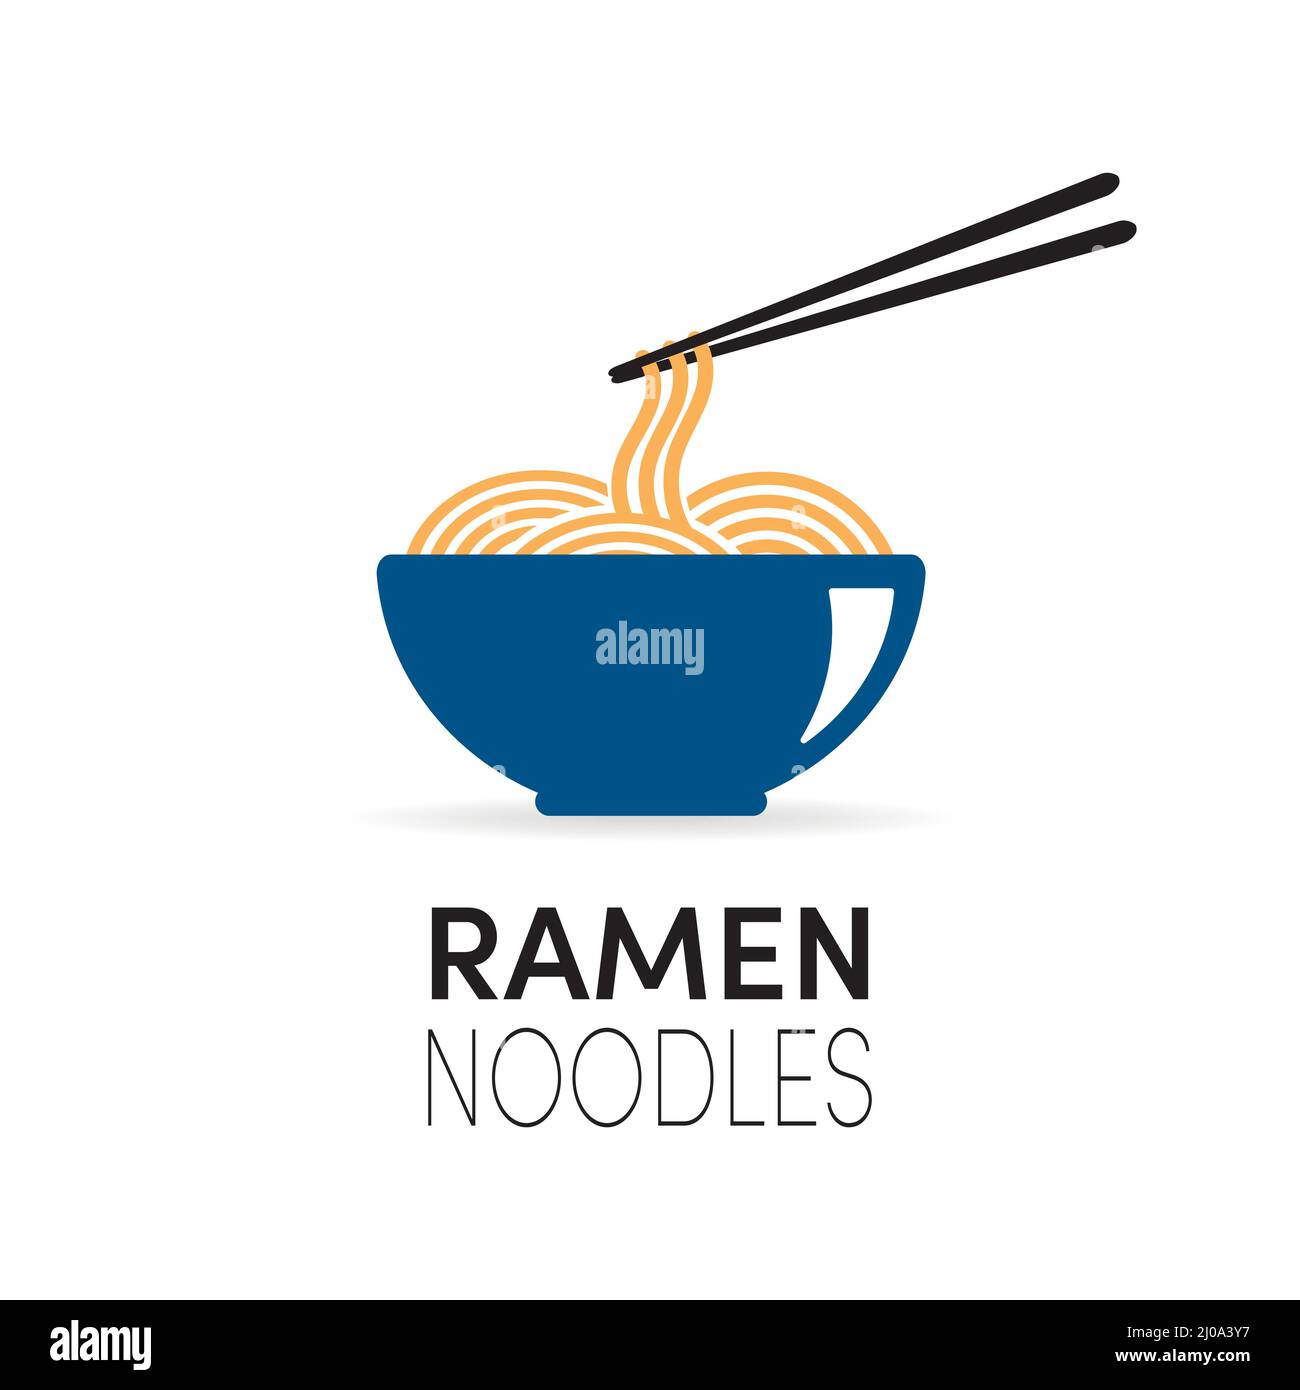 Ramen Noodles - Vector illustration on a white background Stock Vector